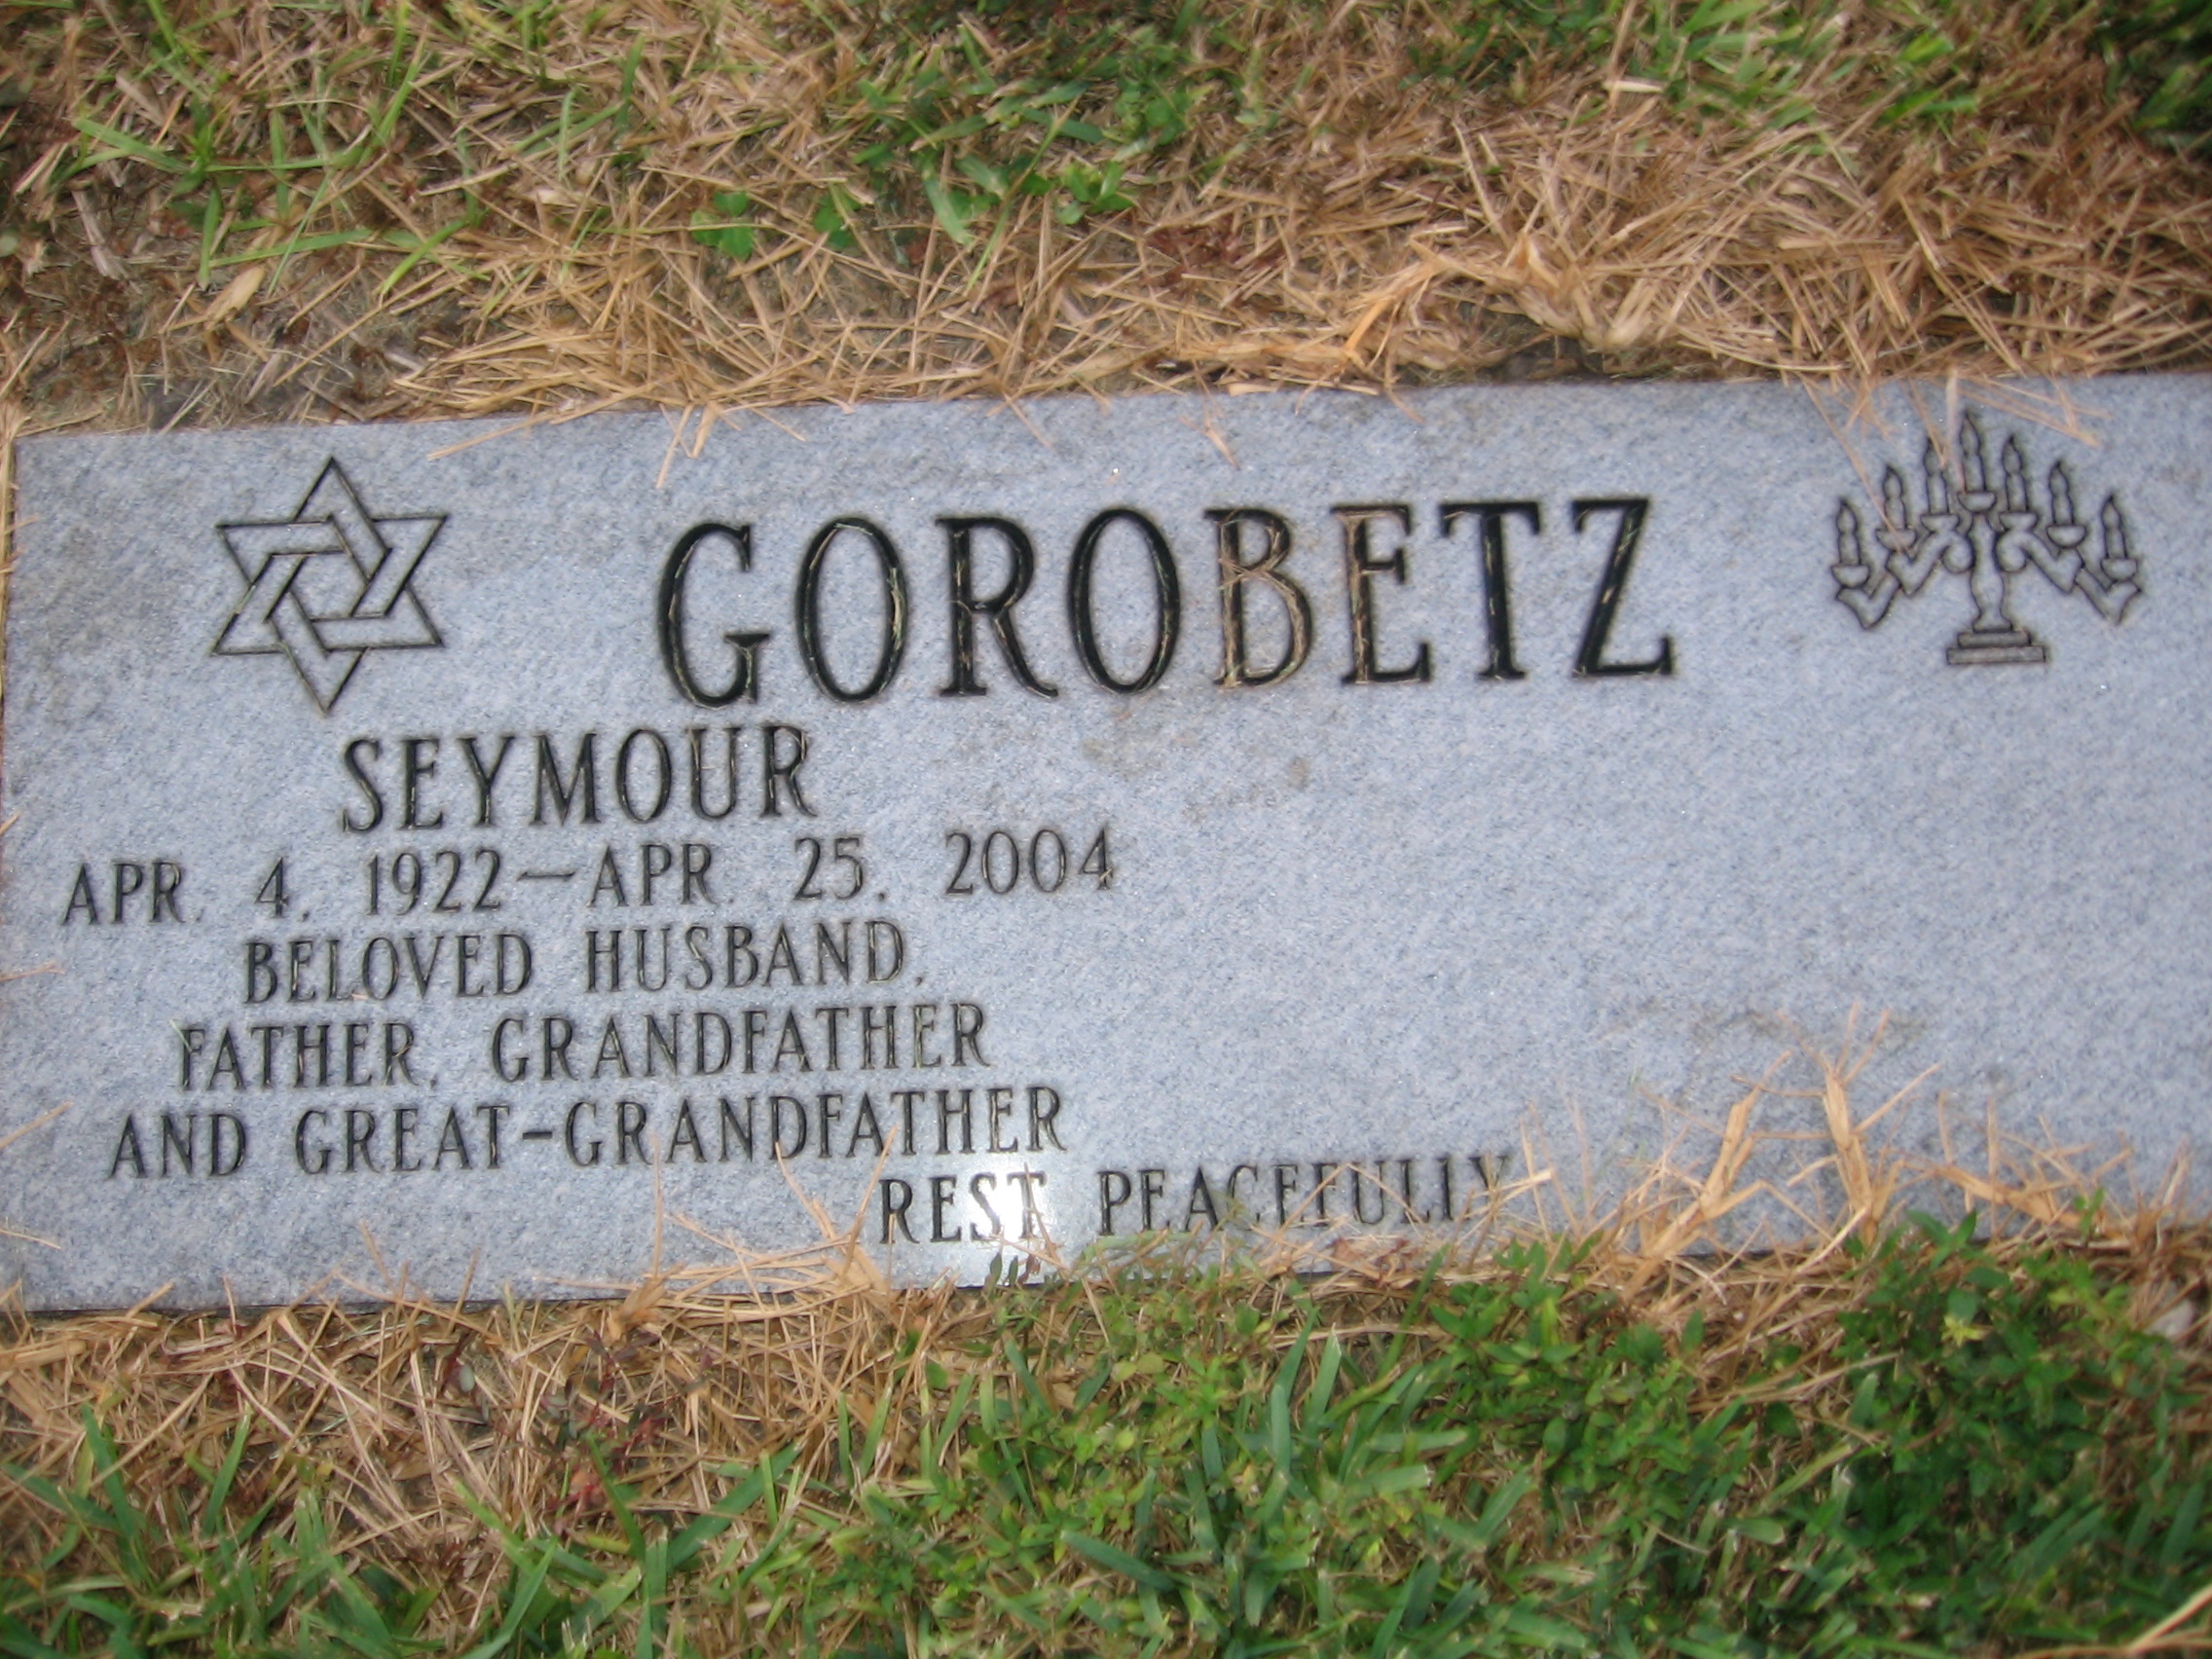 Seymour Gorobetz